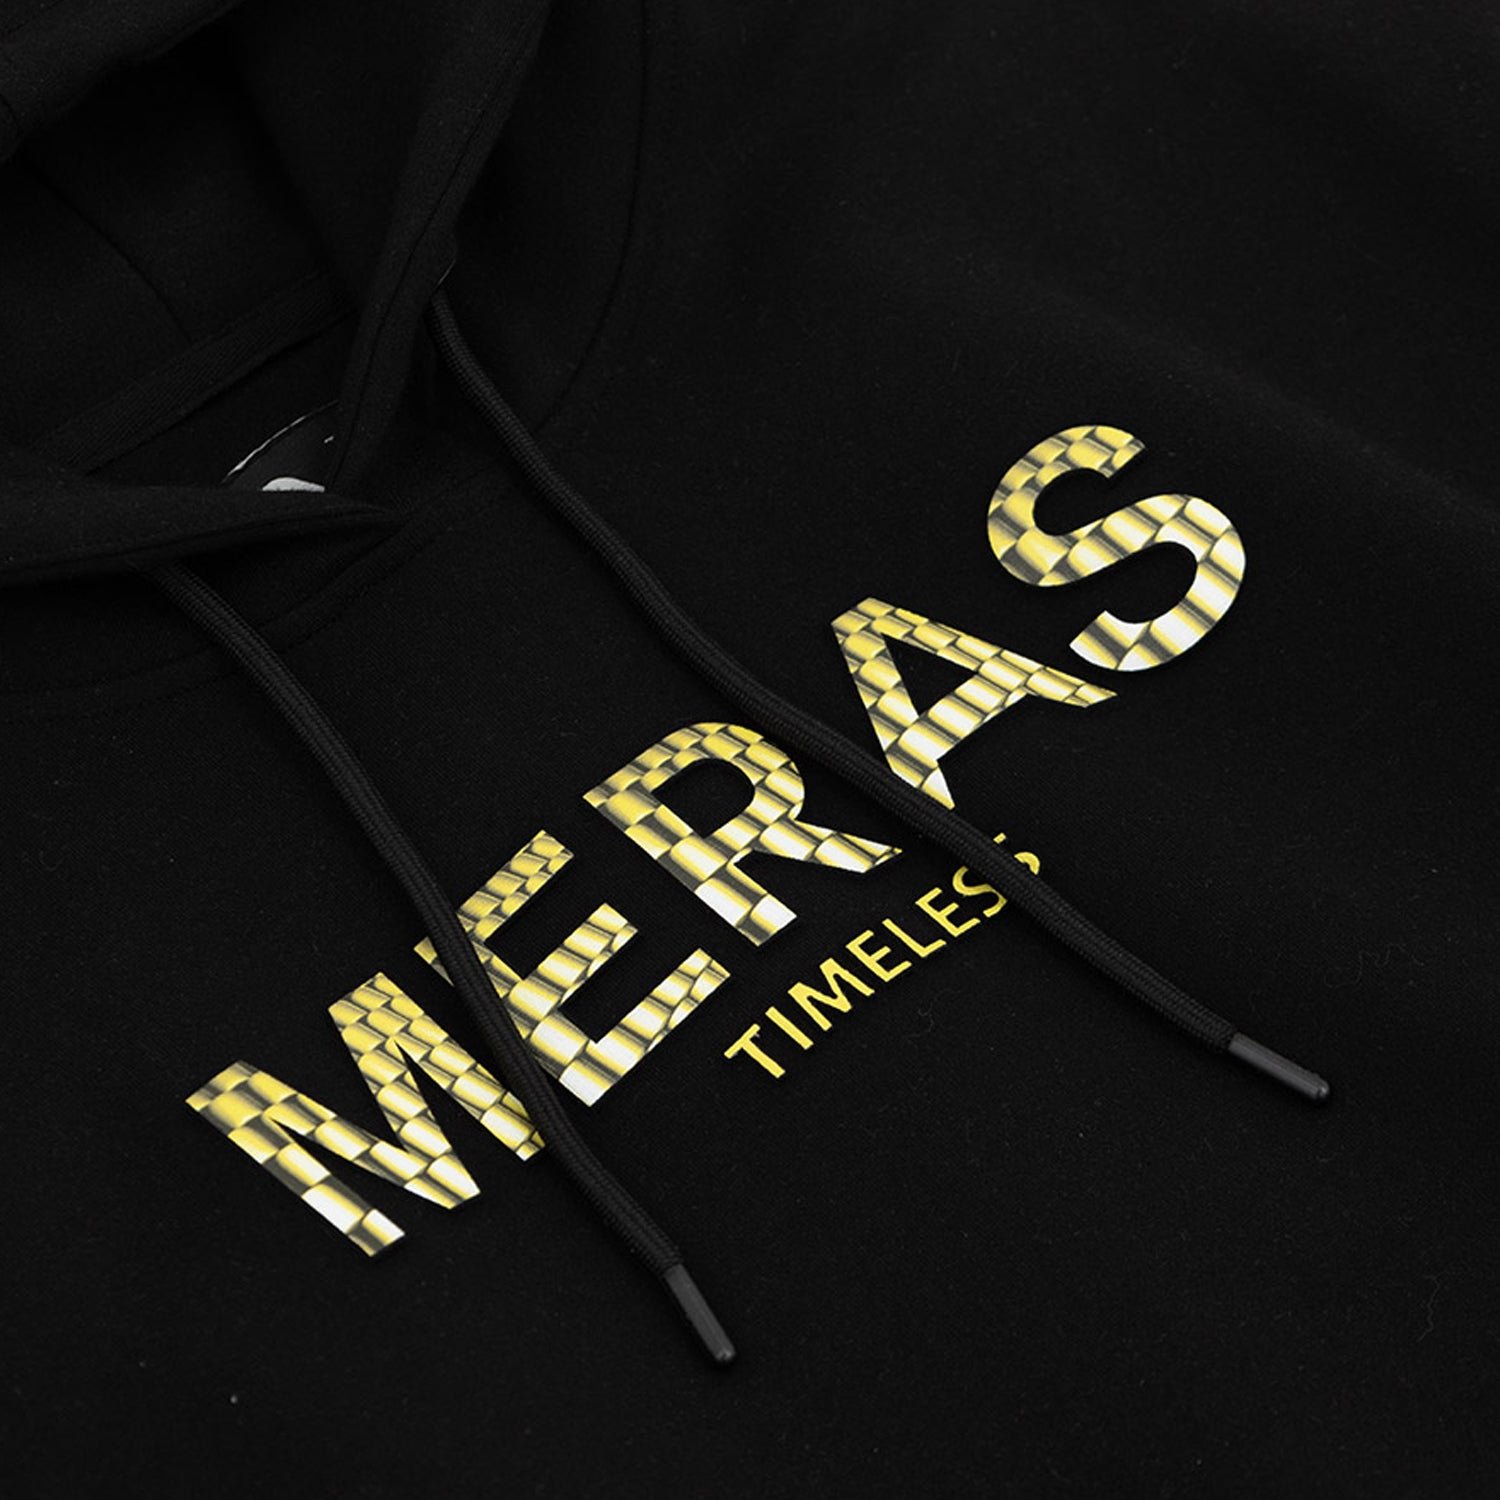 womens-meras-timeless-logo-pull-over-hoodie-mcw2301-black